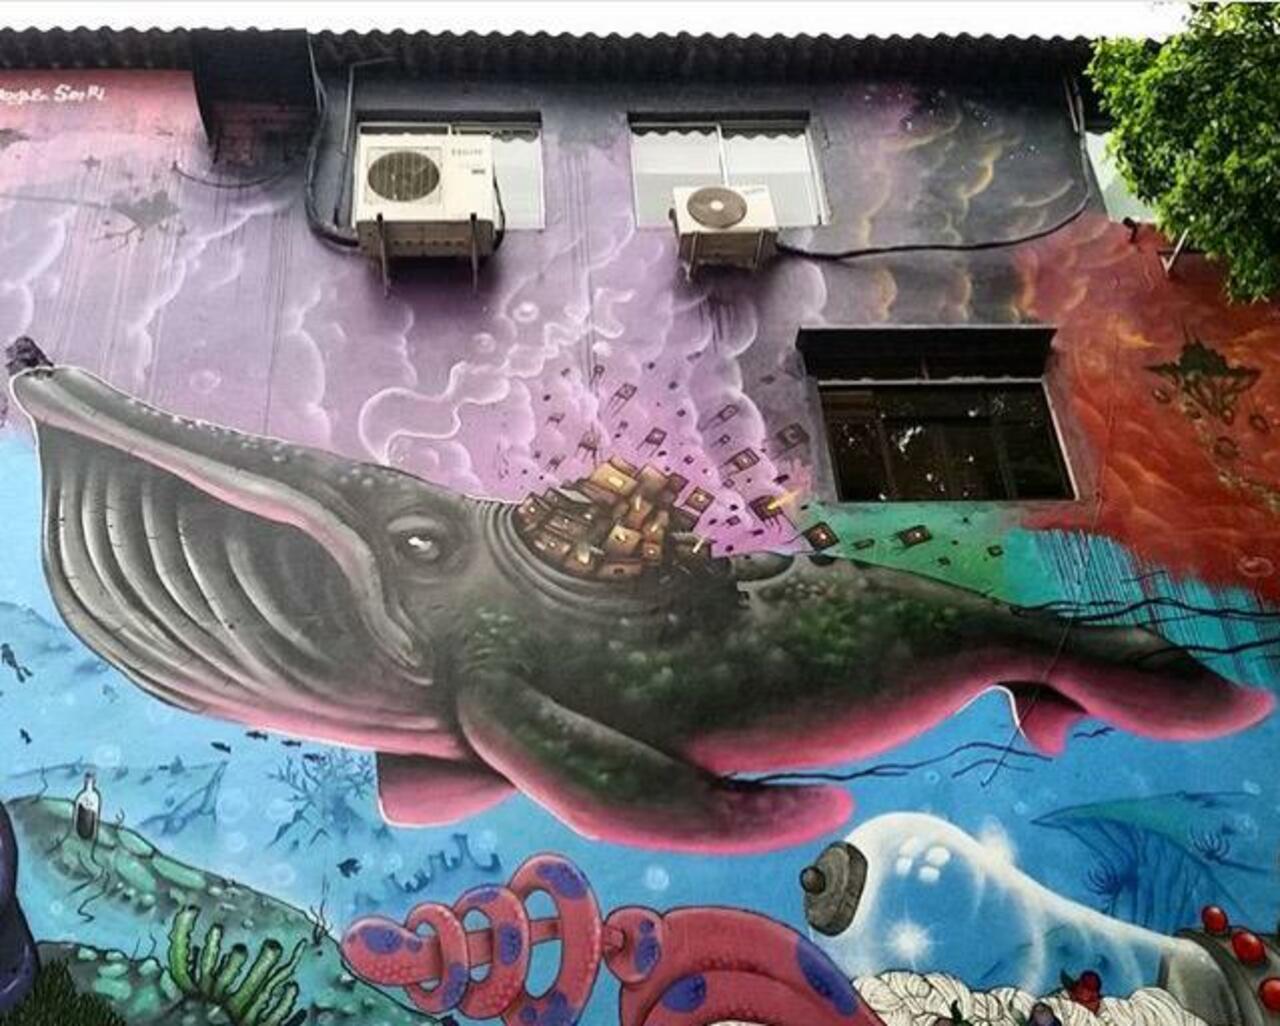 RT belilac "RT belilac "Street Art by joks_johnes Pinheiros, São Paulo 

#art #mural #graffiti #streetart http://t.co/NQjinlBn3V""